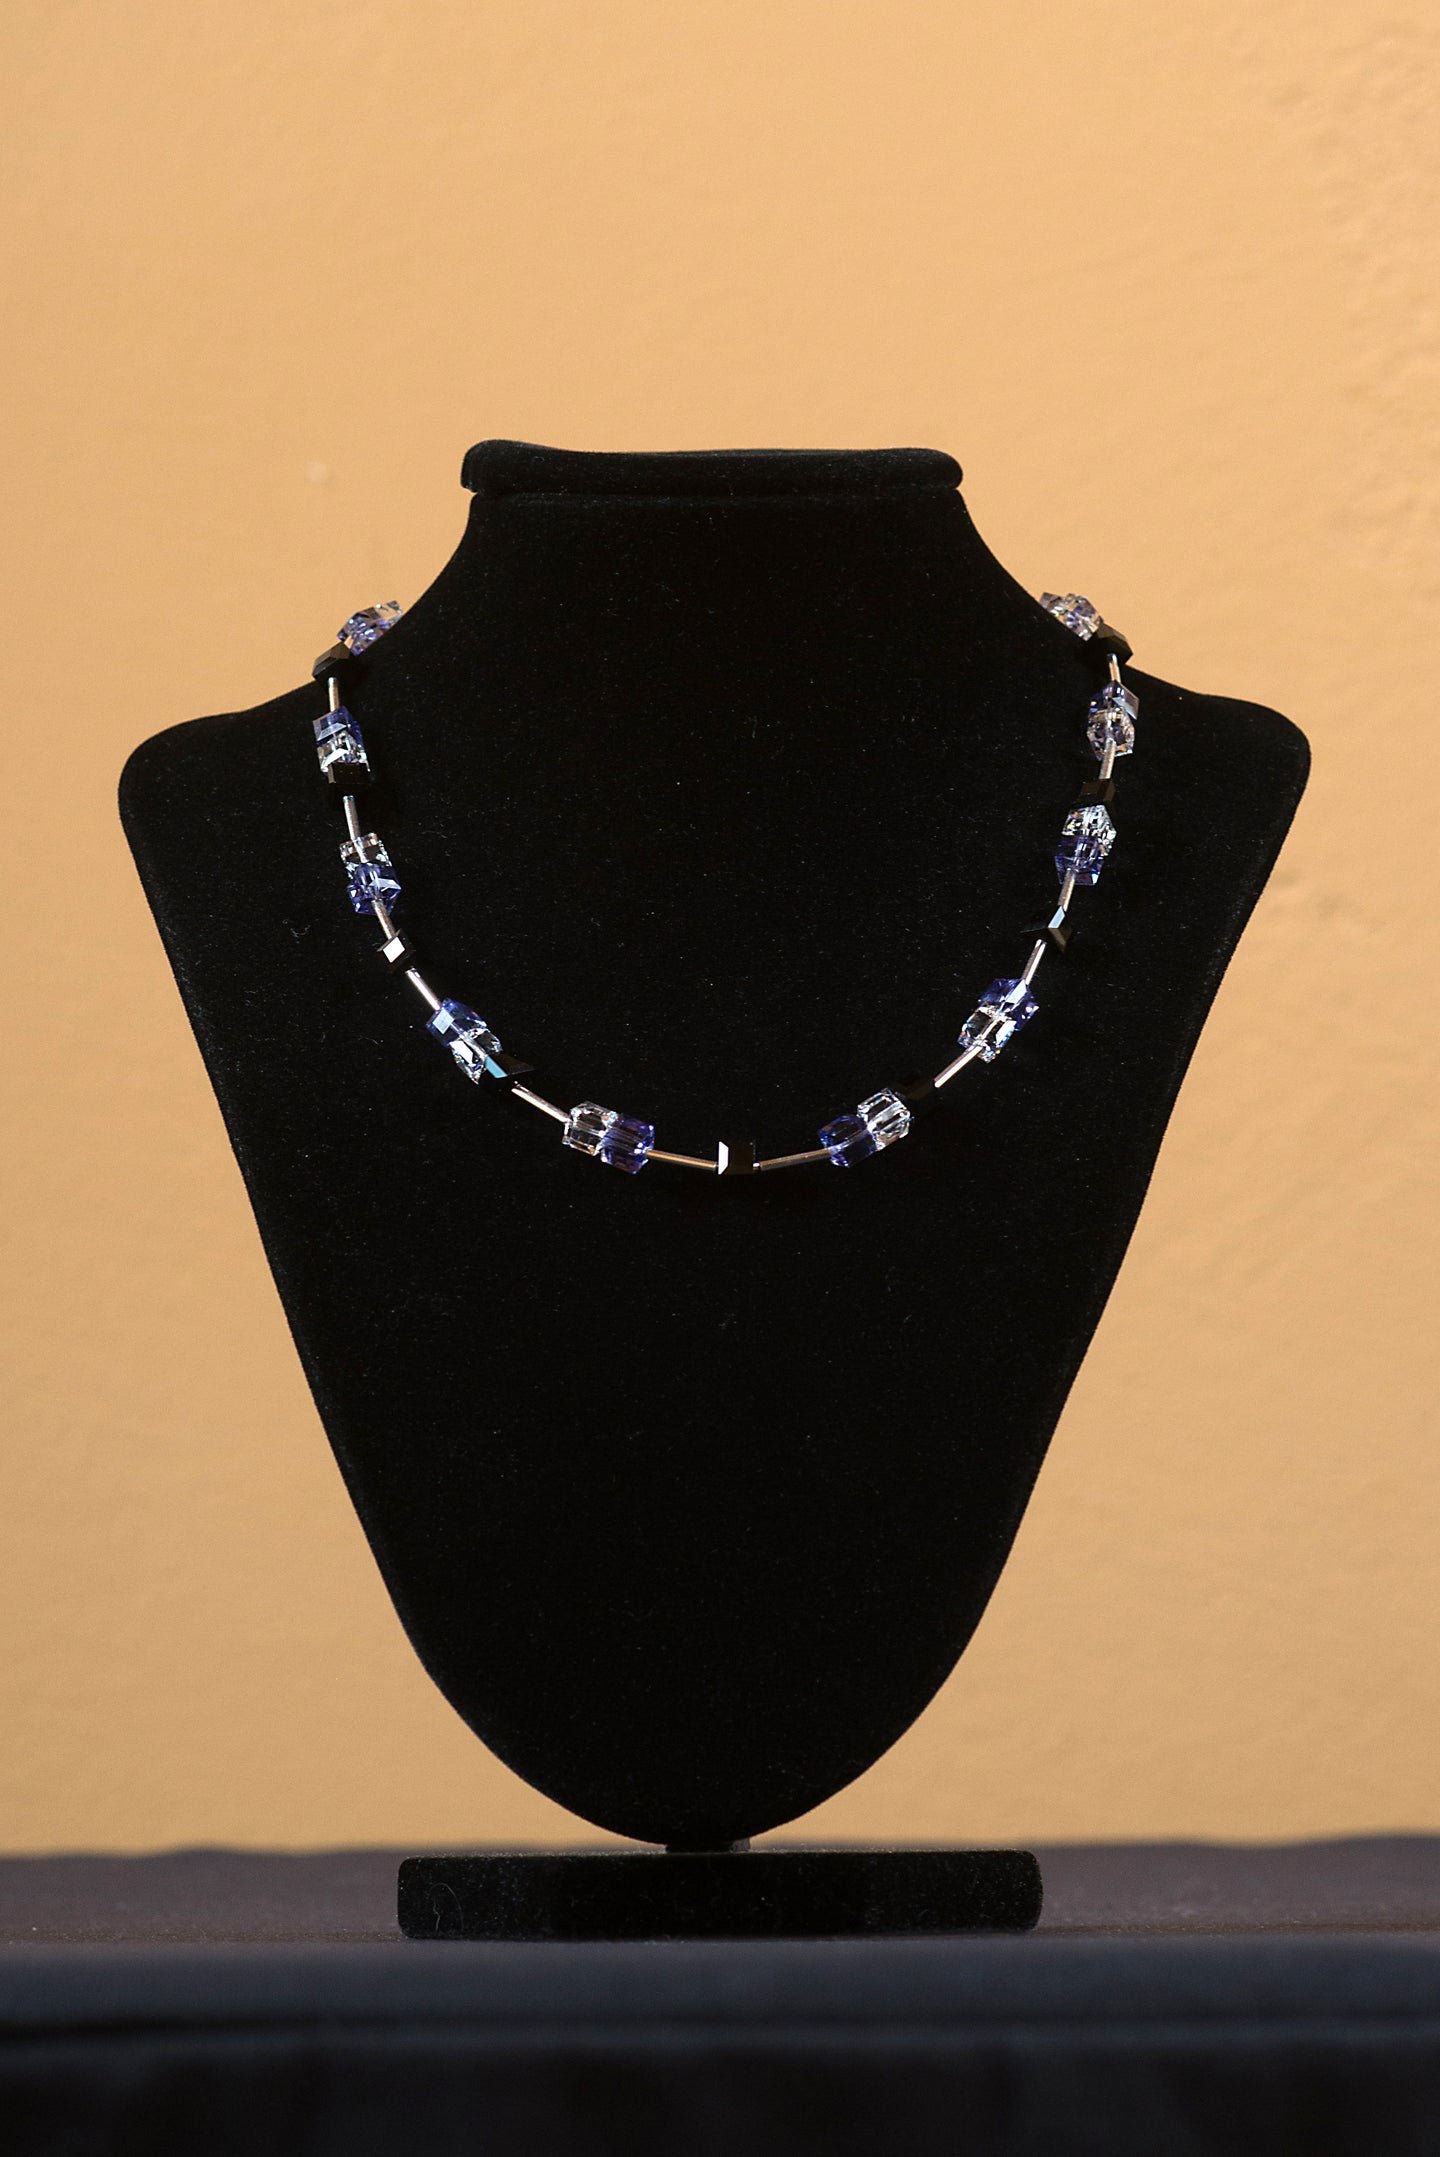 Necklace - Swarovski Crystal, Sterling Silver